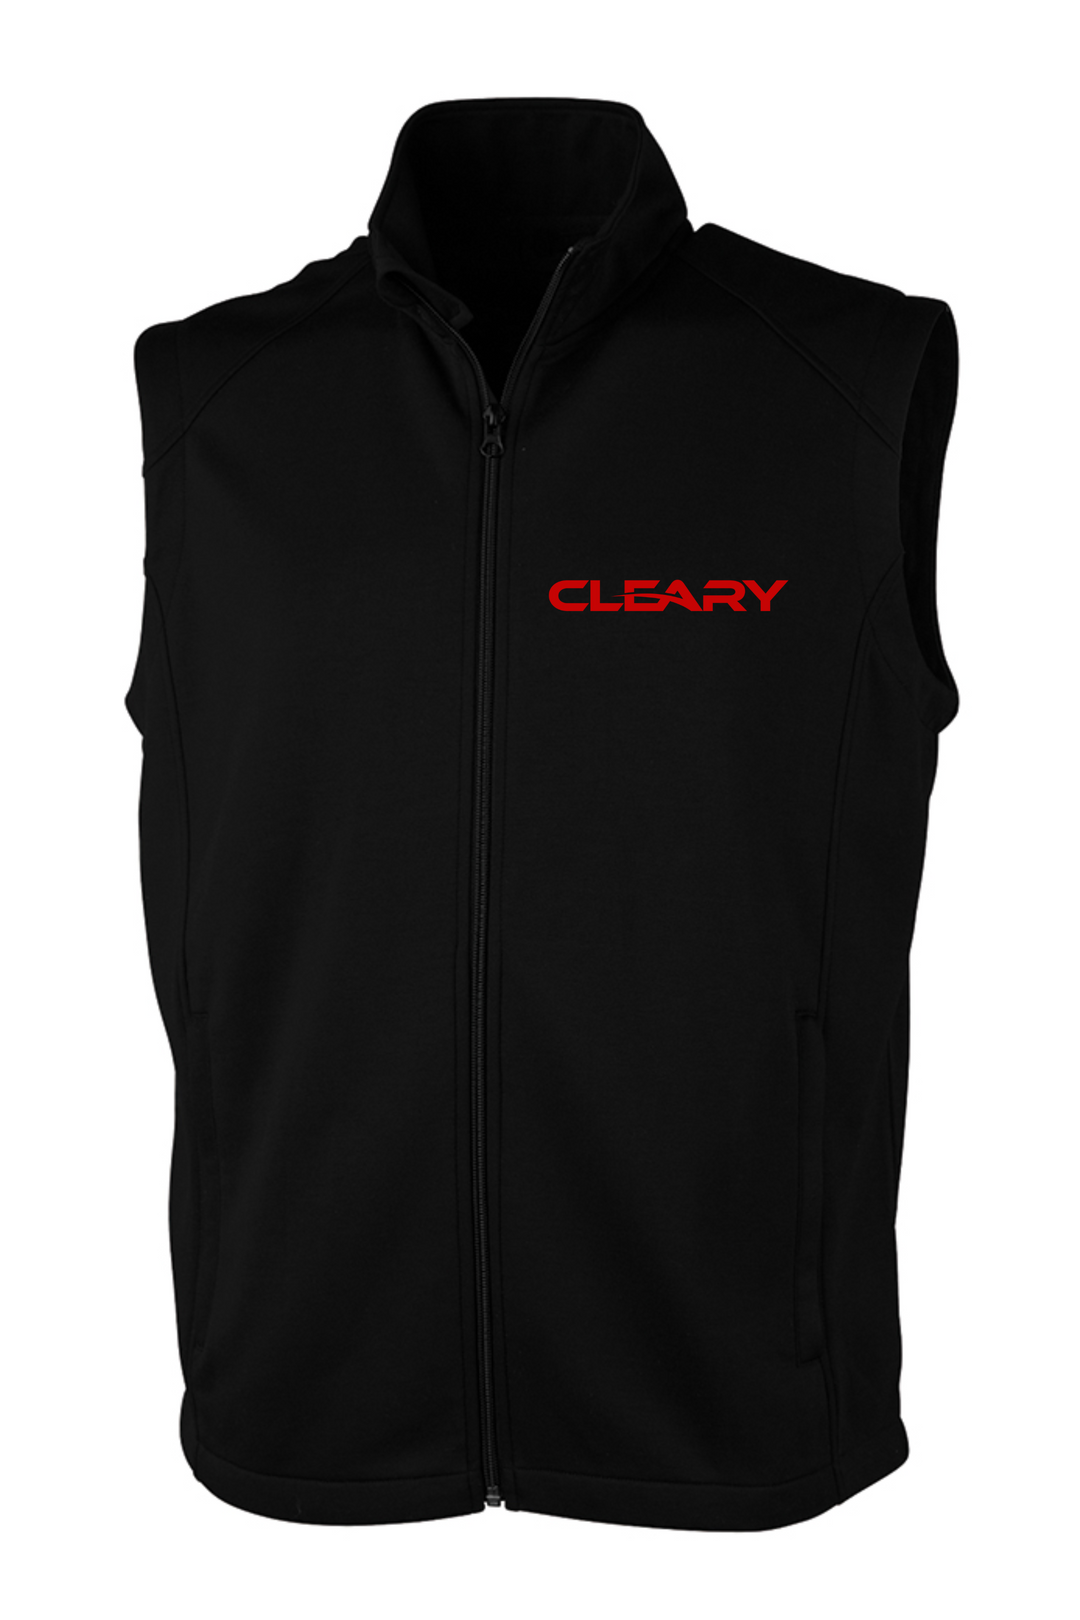 Cleary's Men's Seaport Full Zip Performance Vest Black